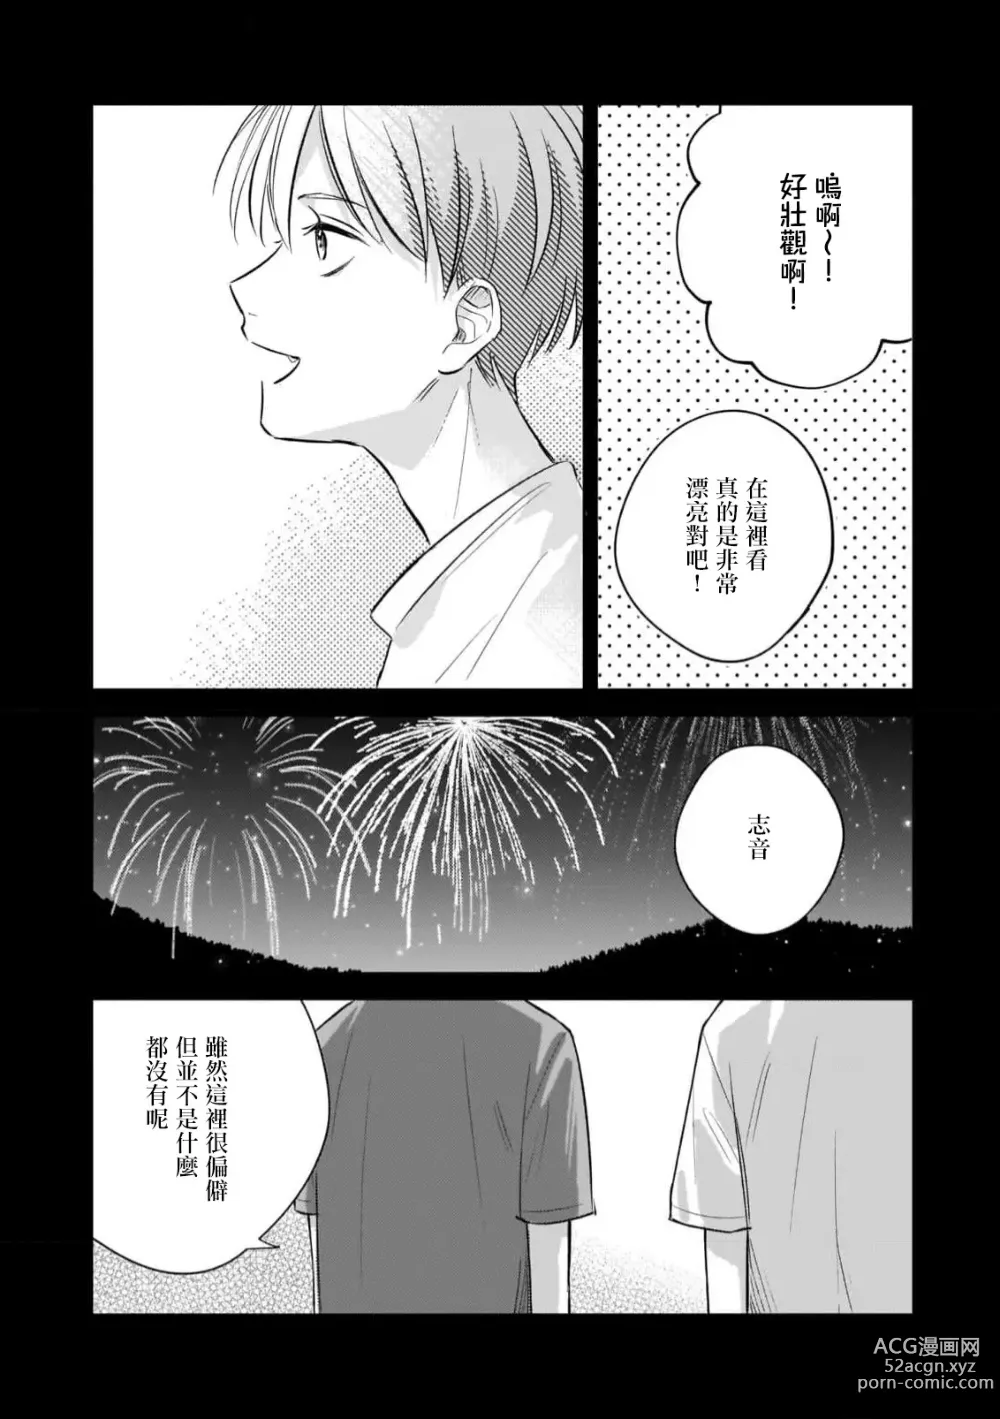 Page 8 of manga 无敌的baby blue #03